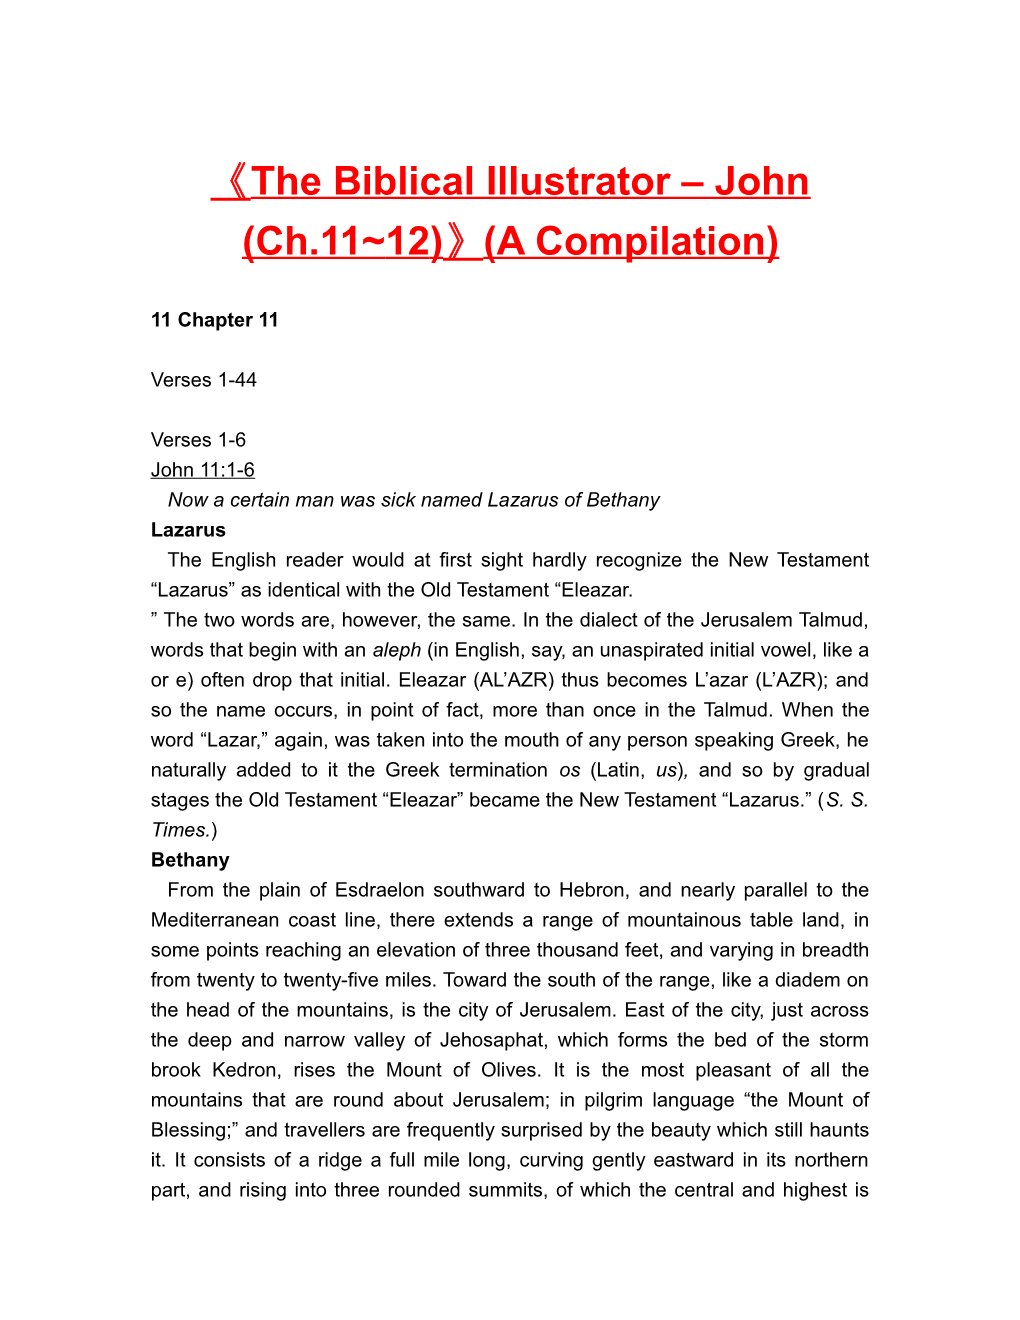 The Biblical Illustrator John (Ch.11 12) (A Compilation)